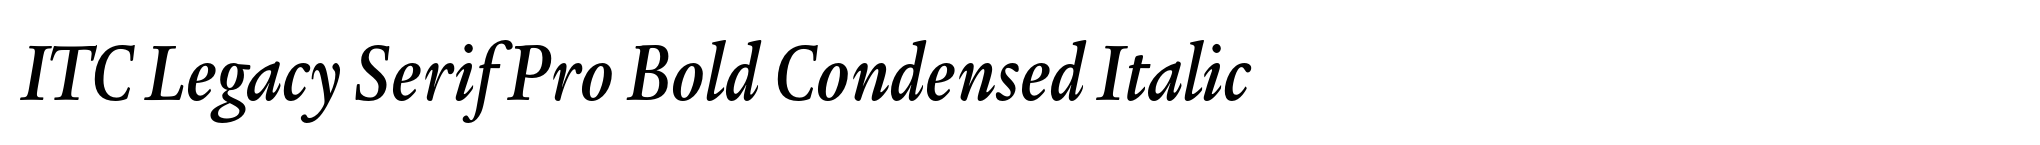 ITC Legacy Serif Pro Bold Condensed Italic image